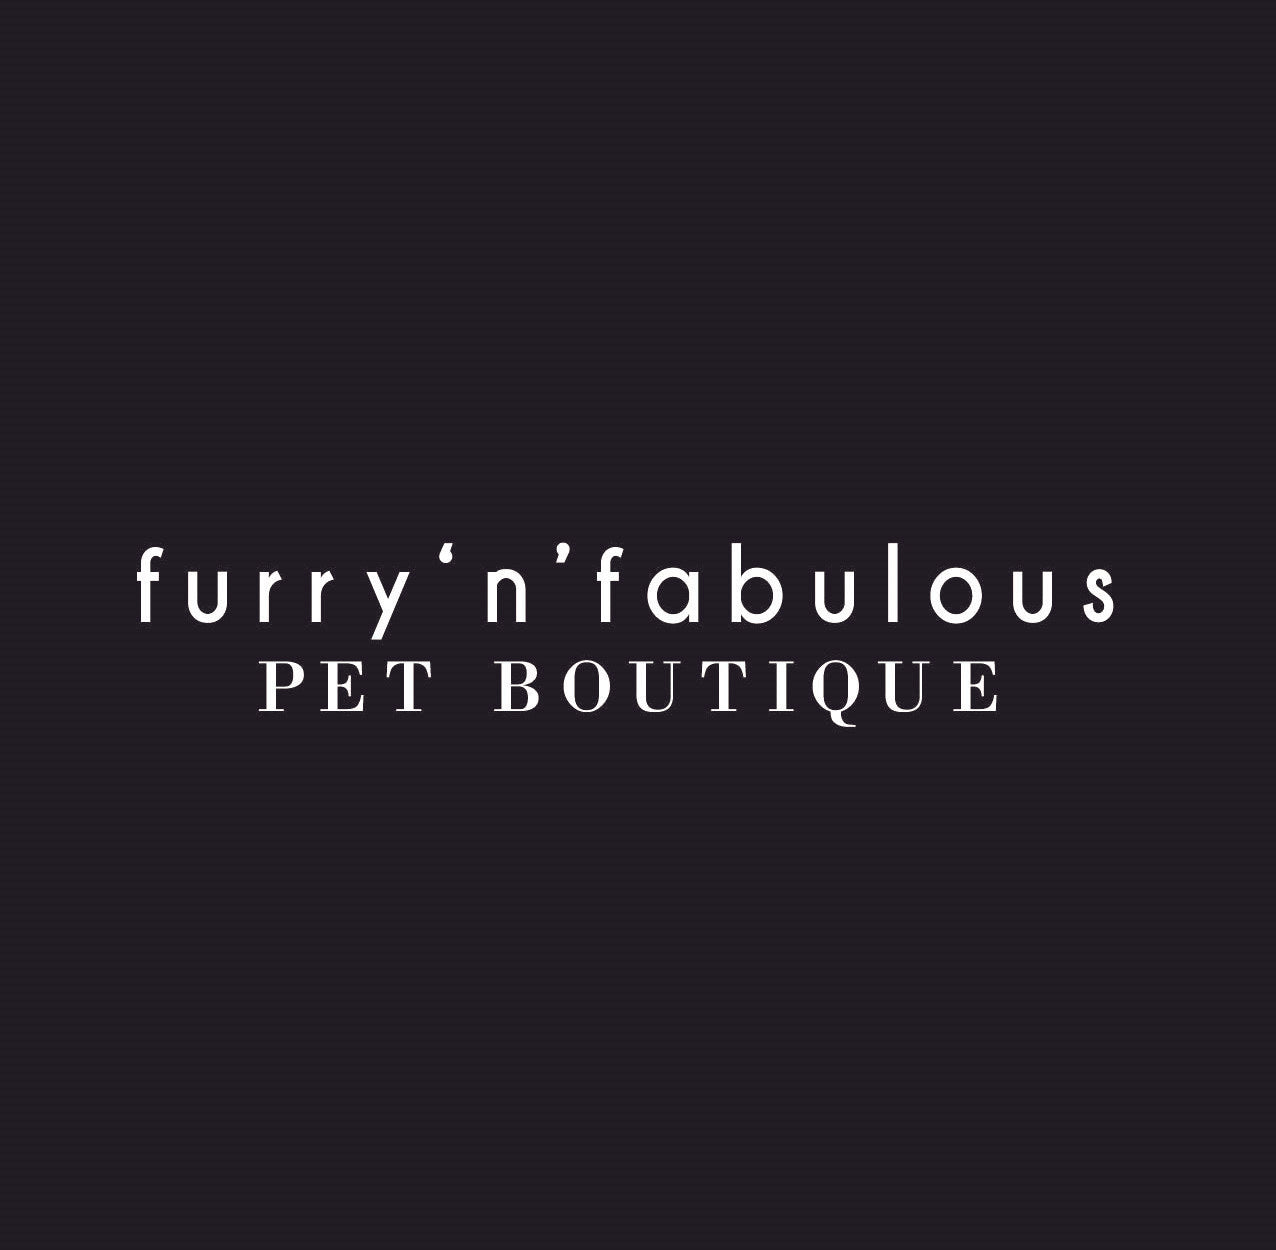 Furry 'n' Fabulous Gift Card